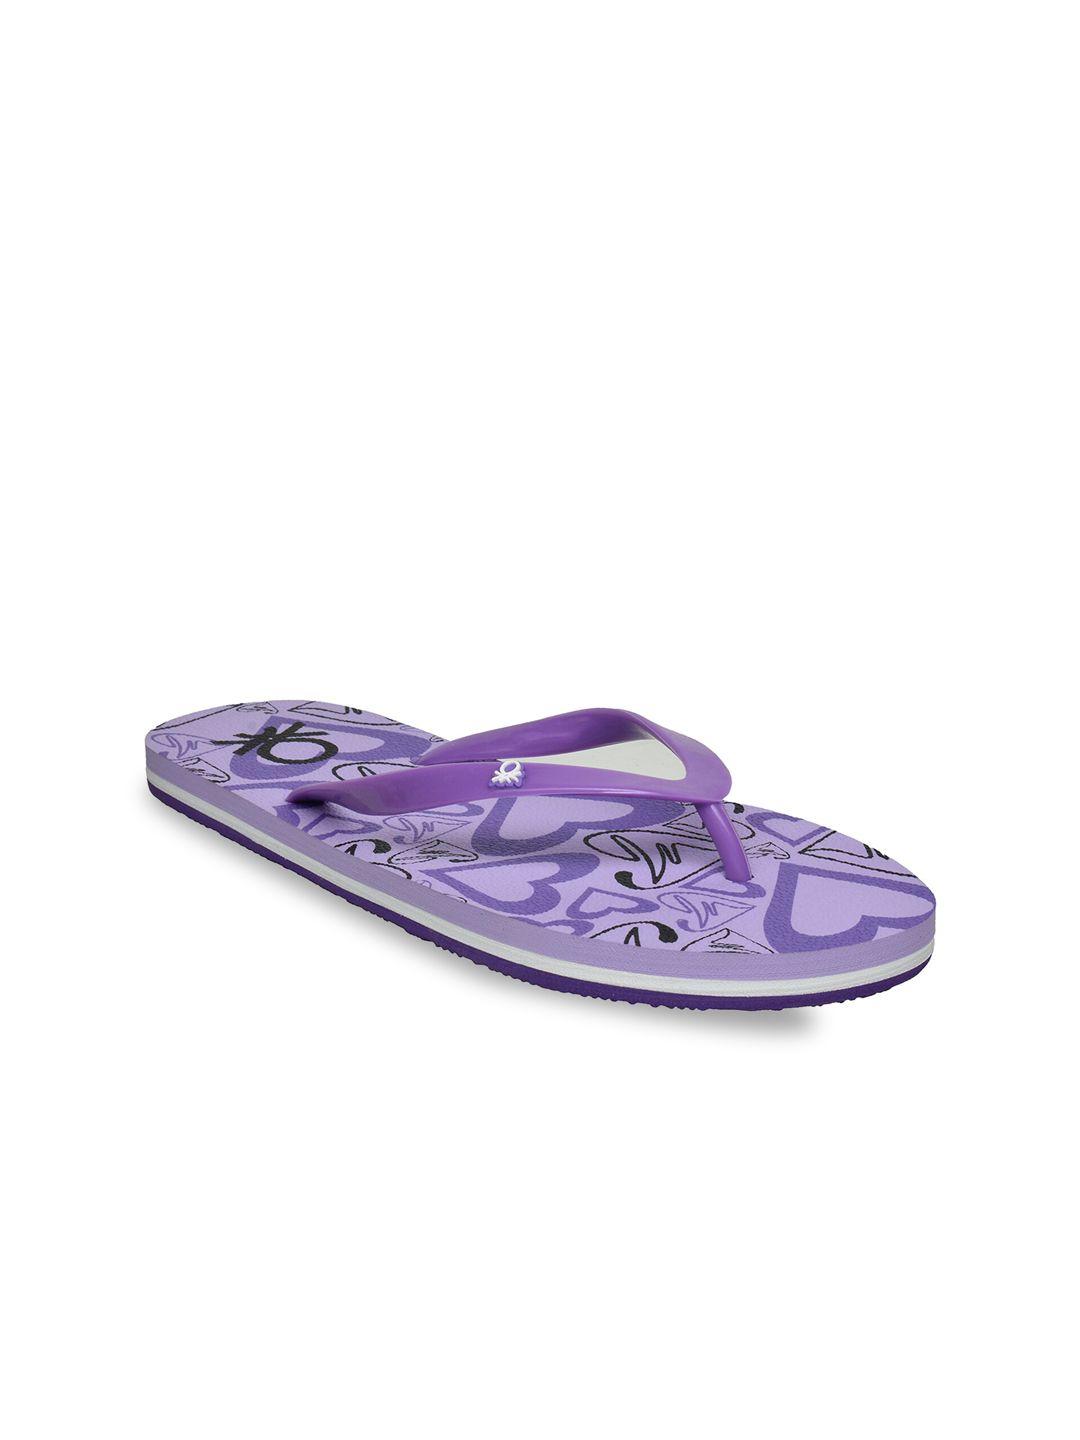 united colors of benetton women purple & black printed rubber thong flip-flops